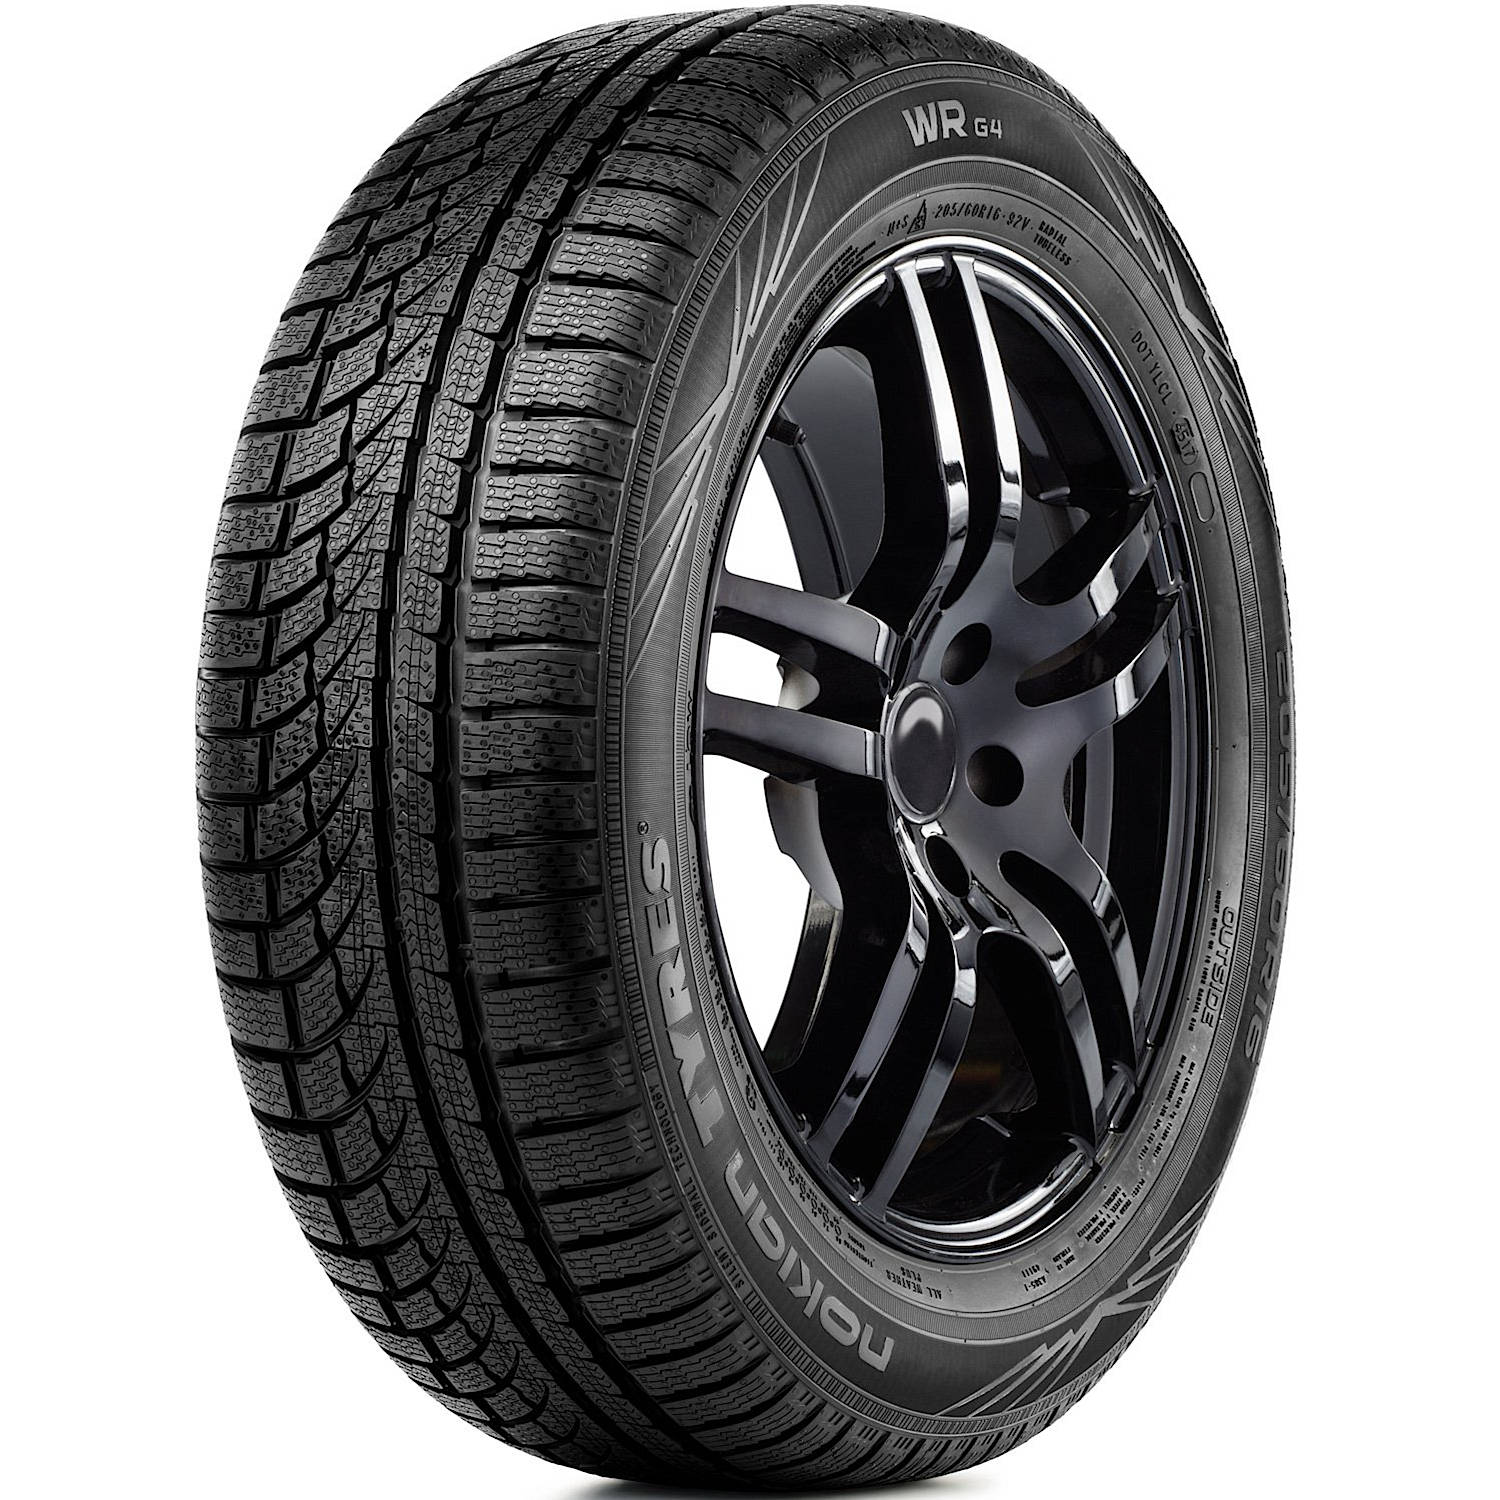 NOKIAN WR G4 195/65R15 (25X7.7R 15) Tires